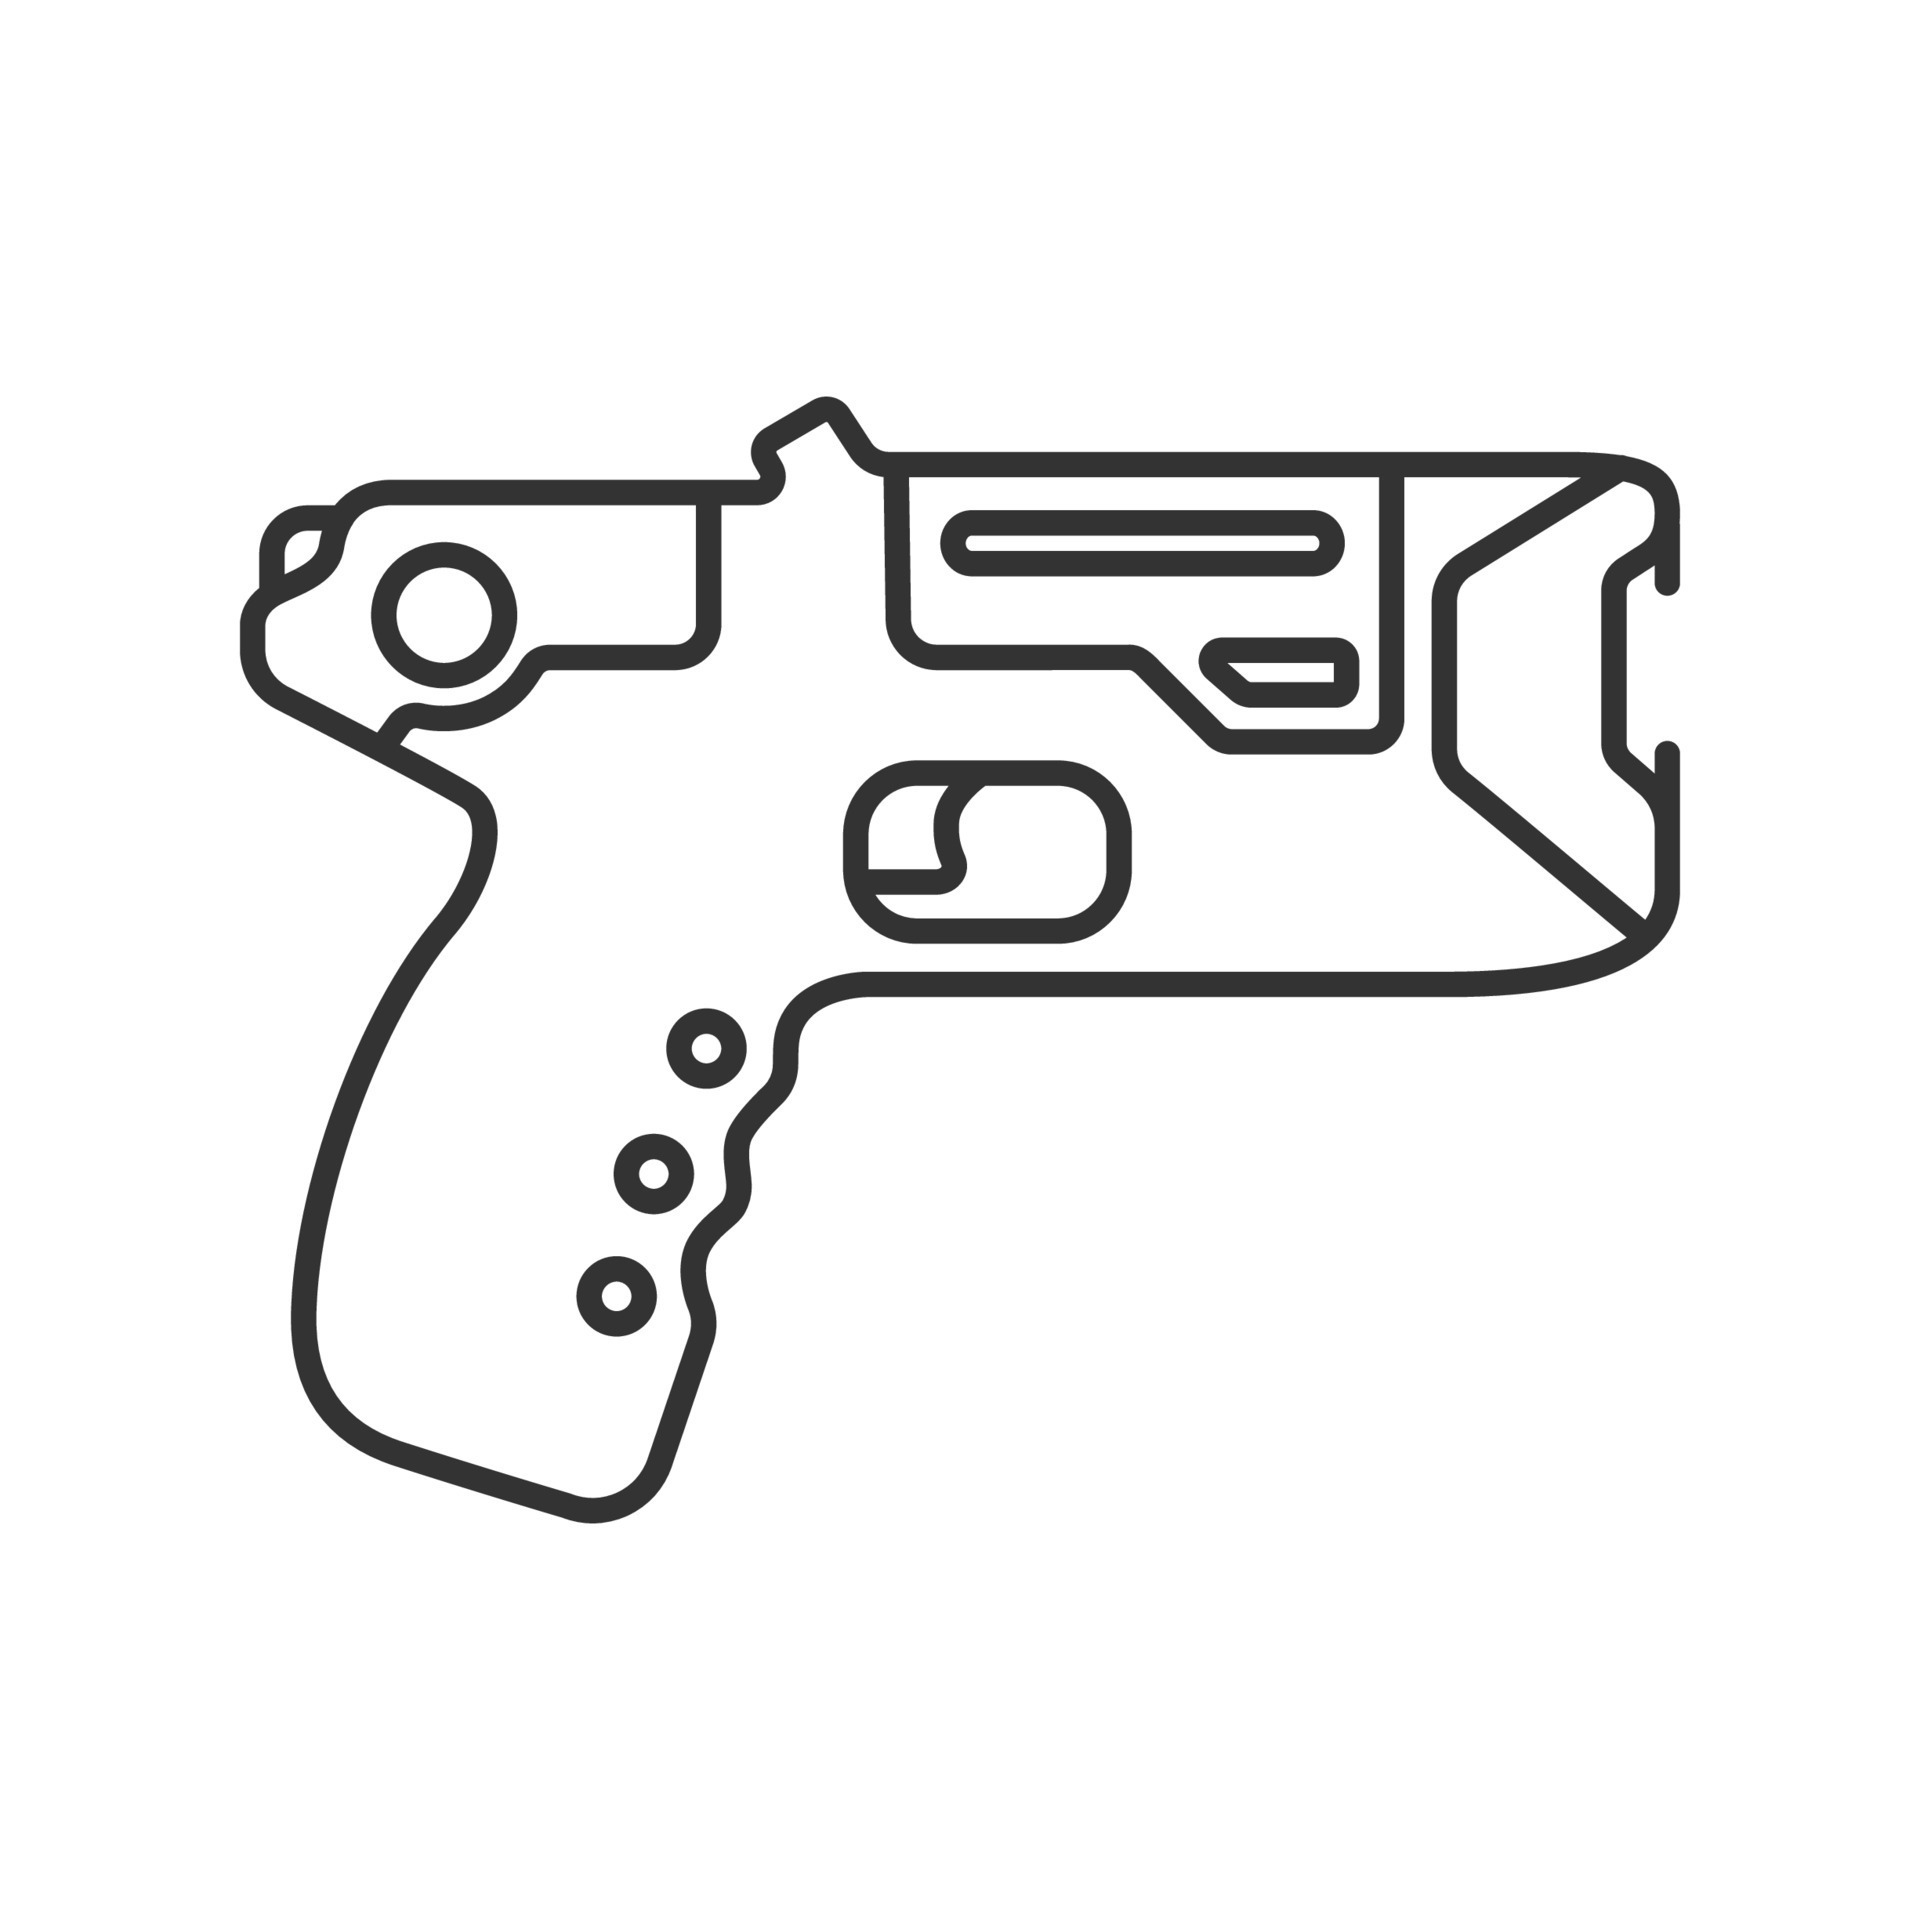 Autodefensa - Taser - pistola aturdidor Vector de Stock de ©kosecki 99825366